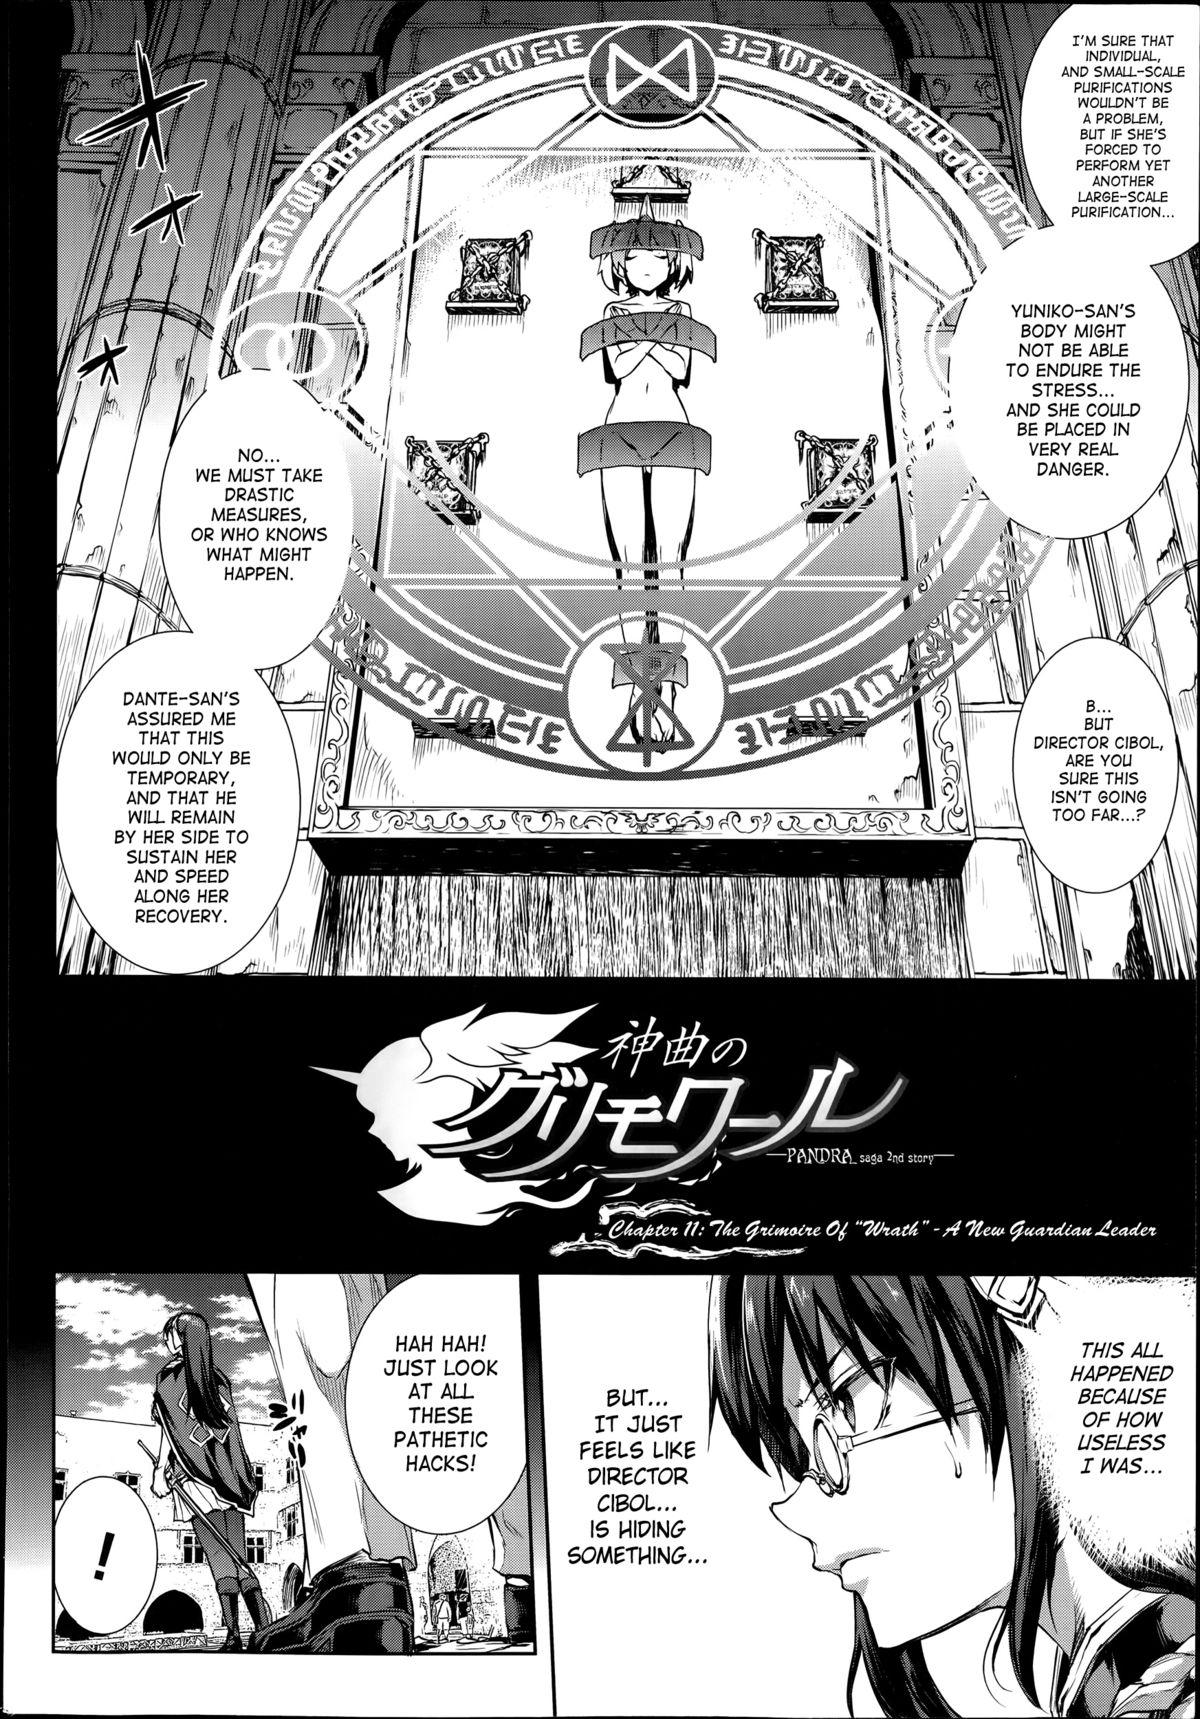 [Erect Sawaru] Shinkyoku no Grimoire -PANDRA saga 2nd story- Ch. 1-13 + Side Story x 3 [English] [SaHa] 332